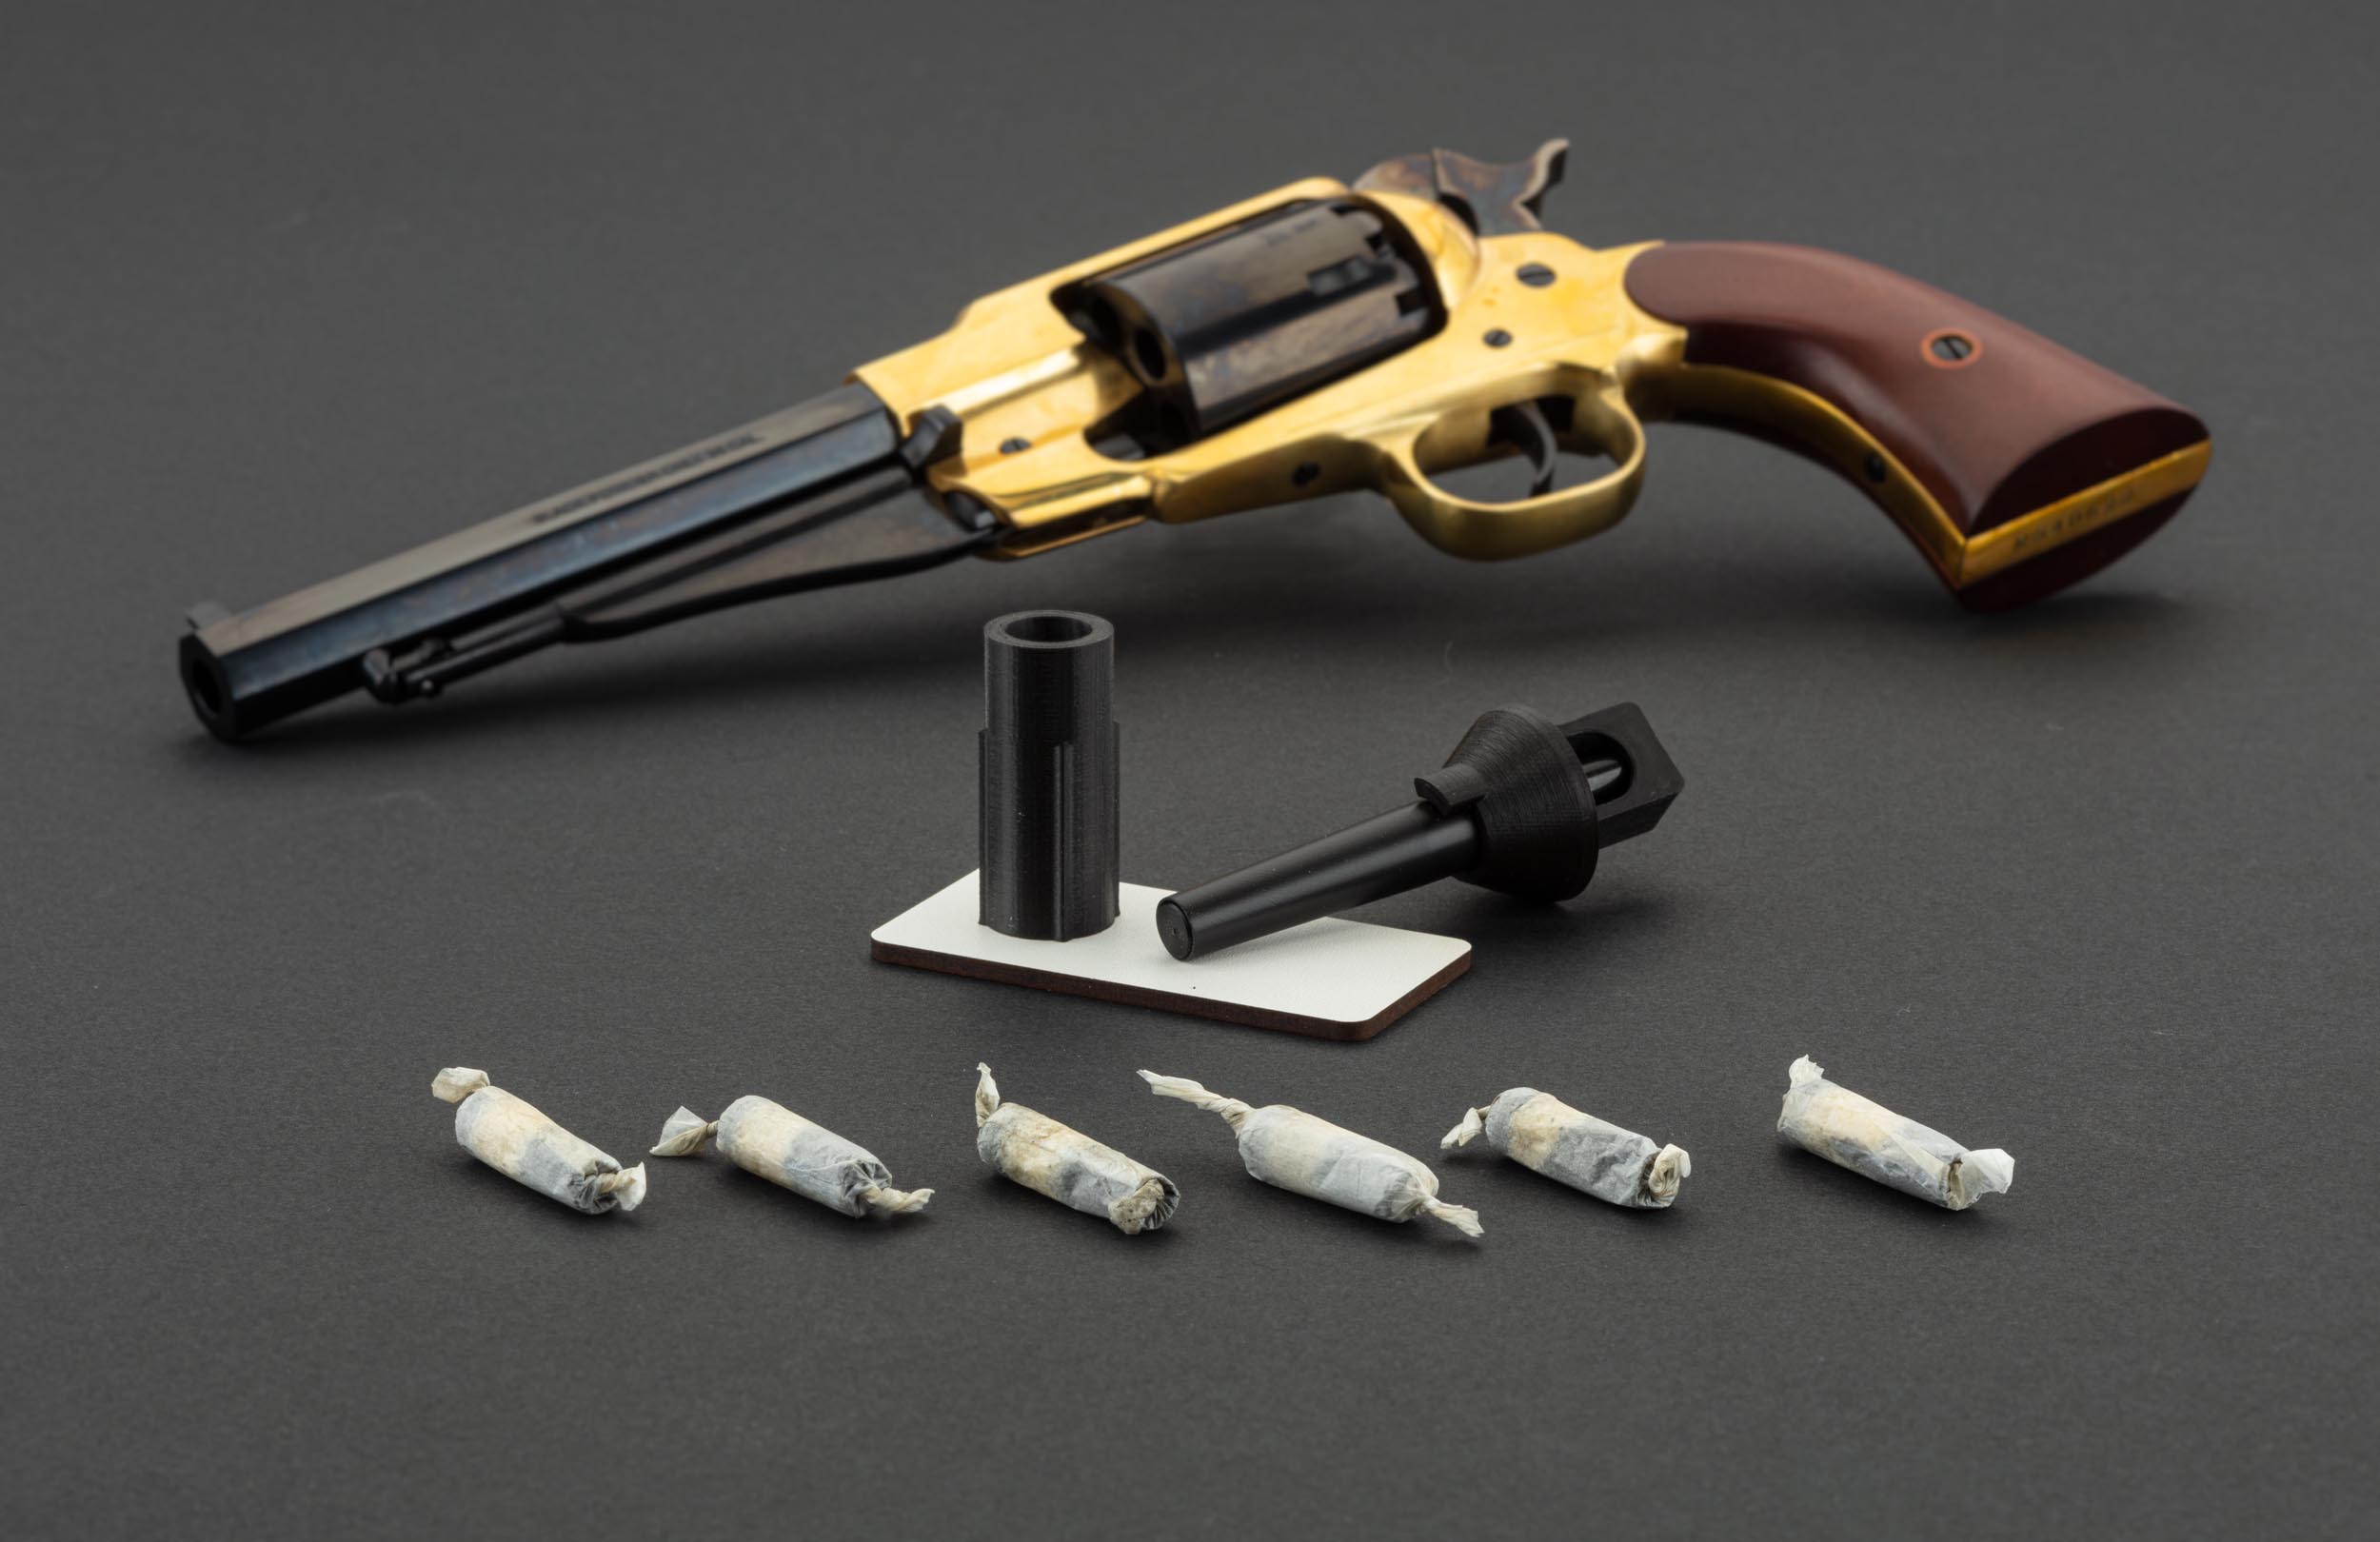 Revolver à poudre noire type Western calibre .44, fabric…